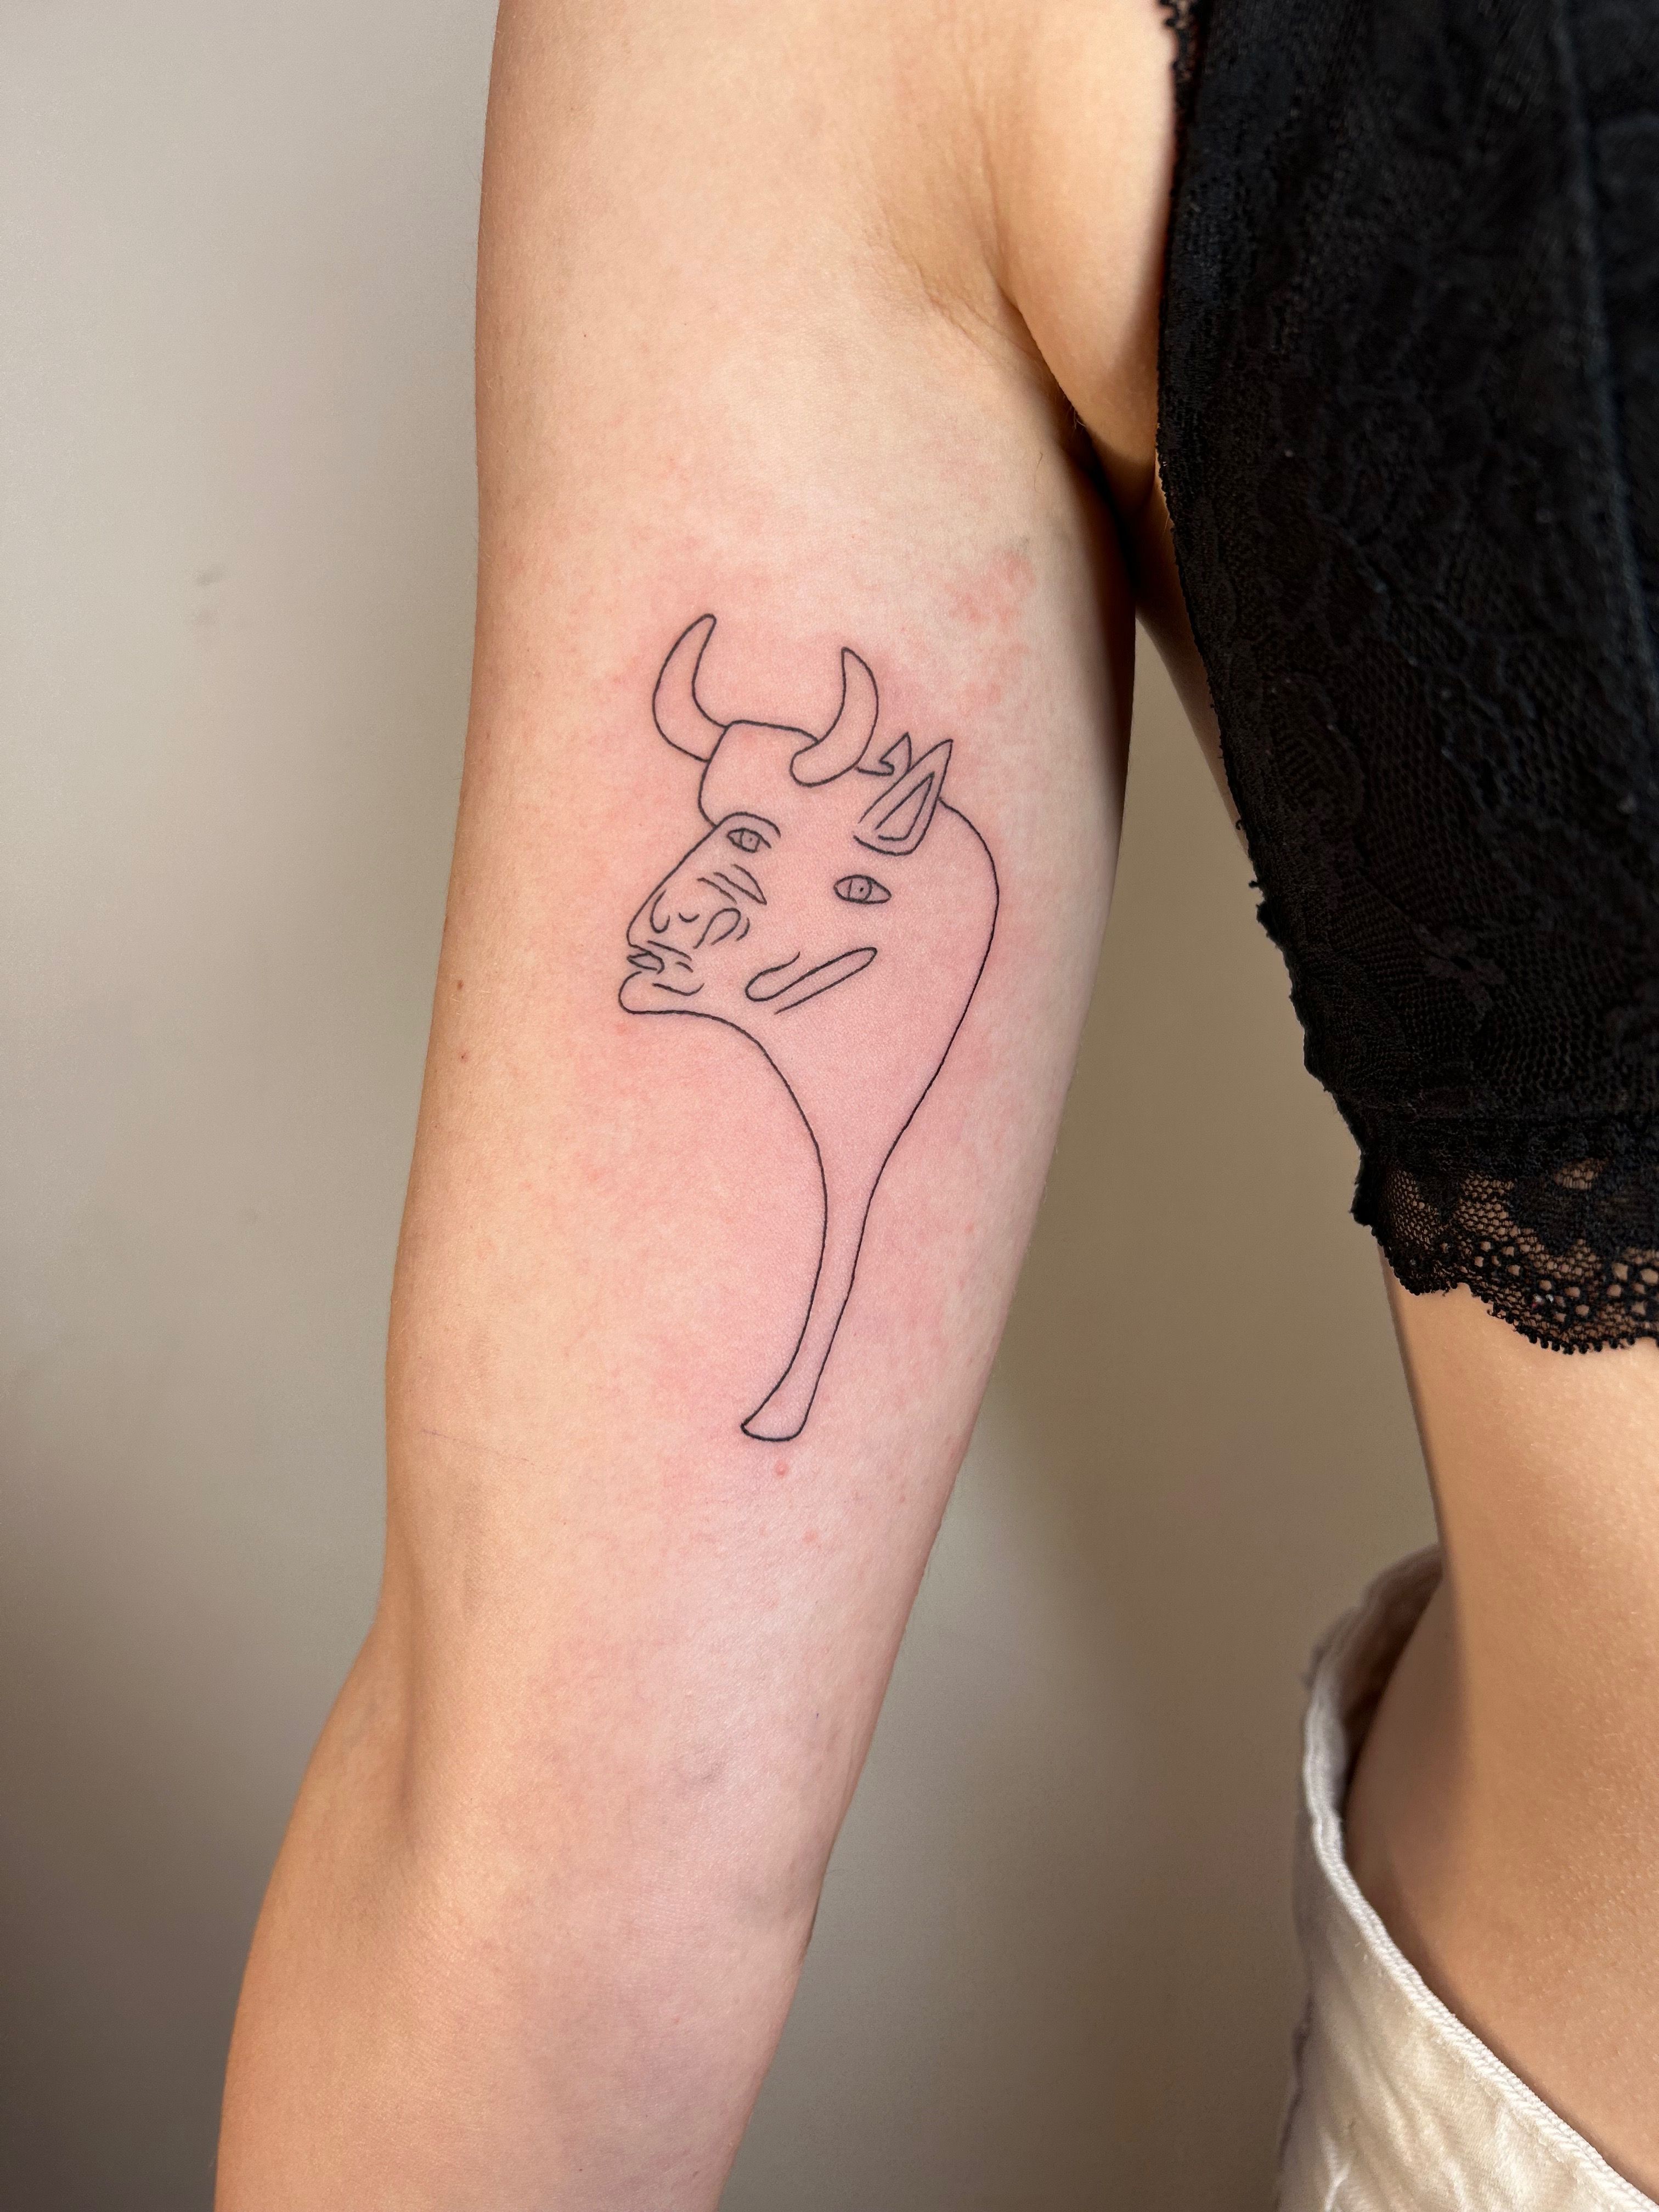 moo cow | Tattoos for women, Tiny tattoos, Simplistic tattoos